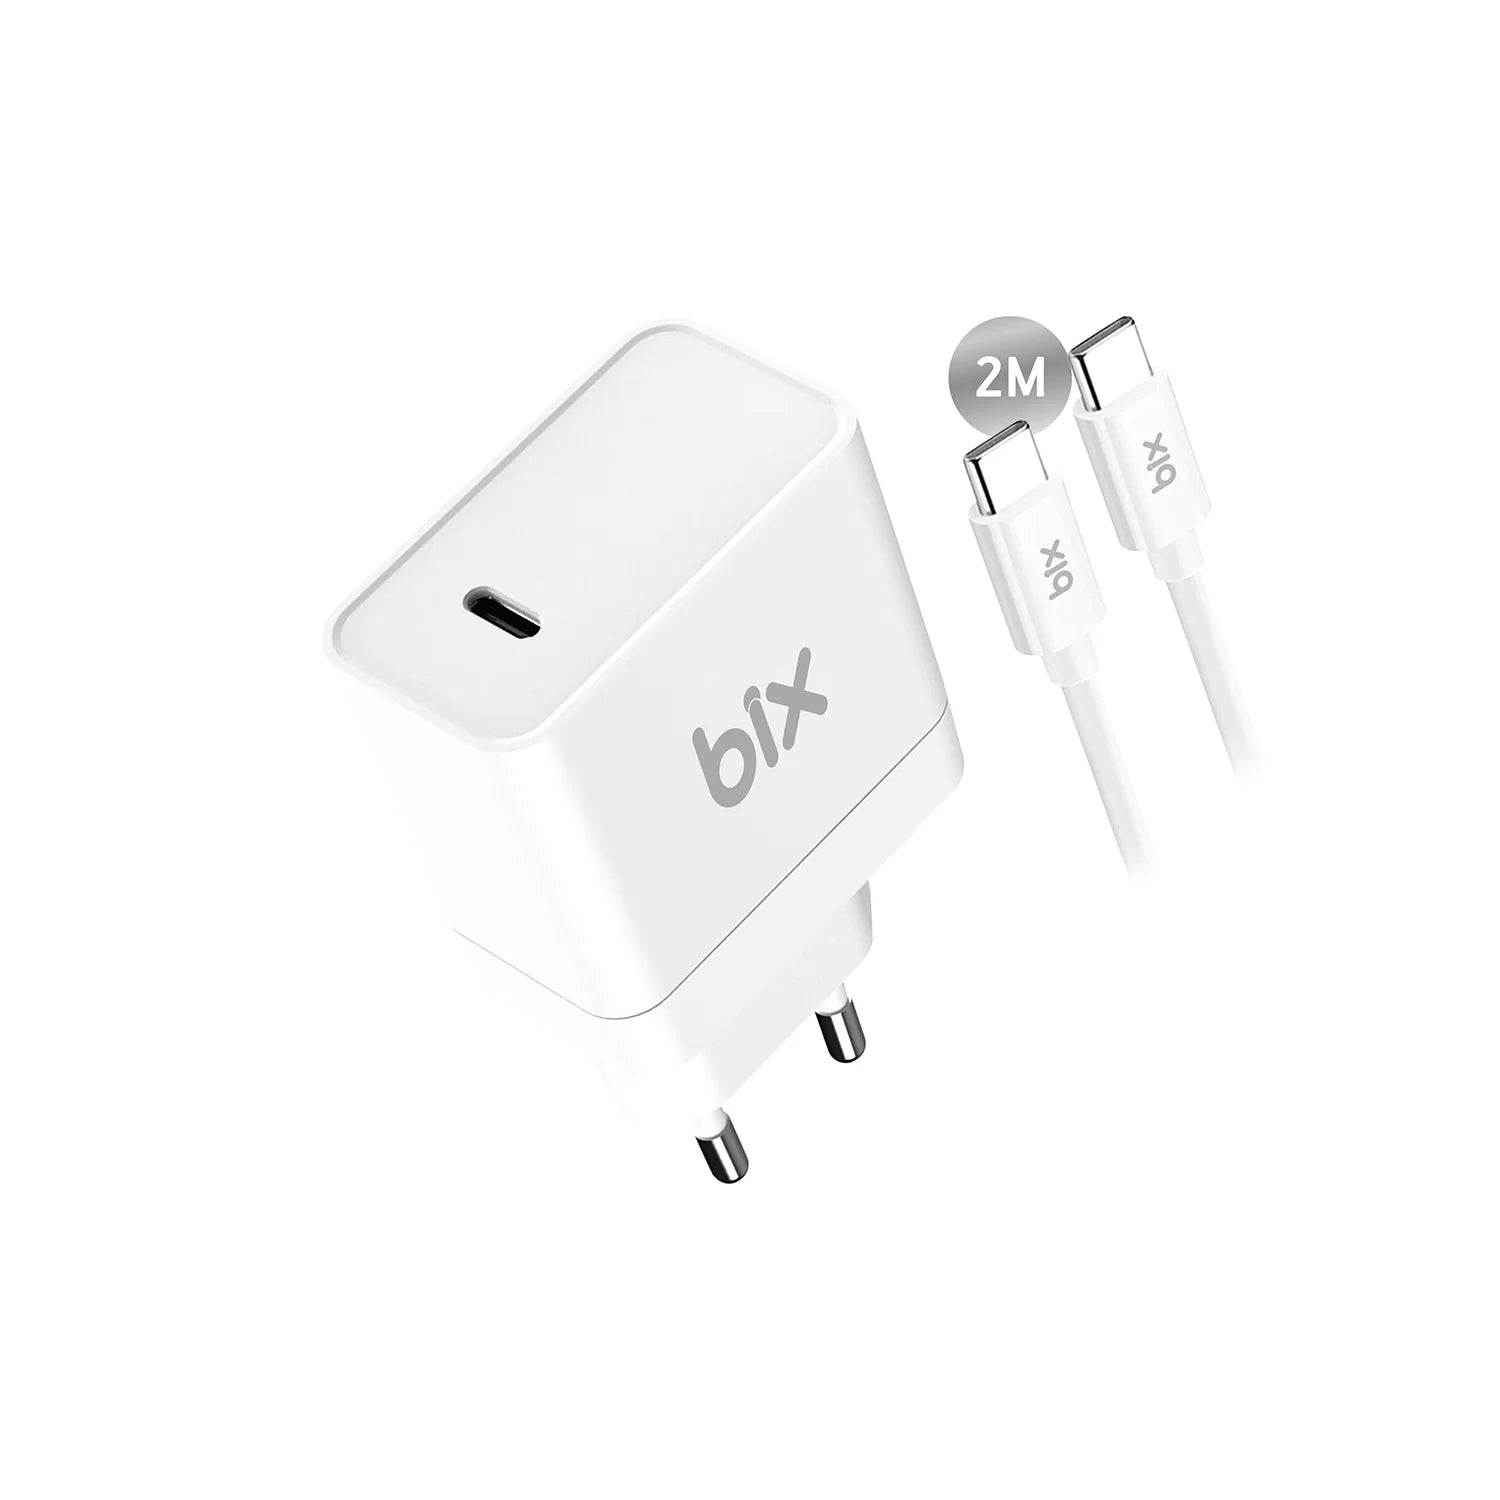 Bix Seyahat Şarj Cihazı Beyaz 5A Type-C Kablosu